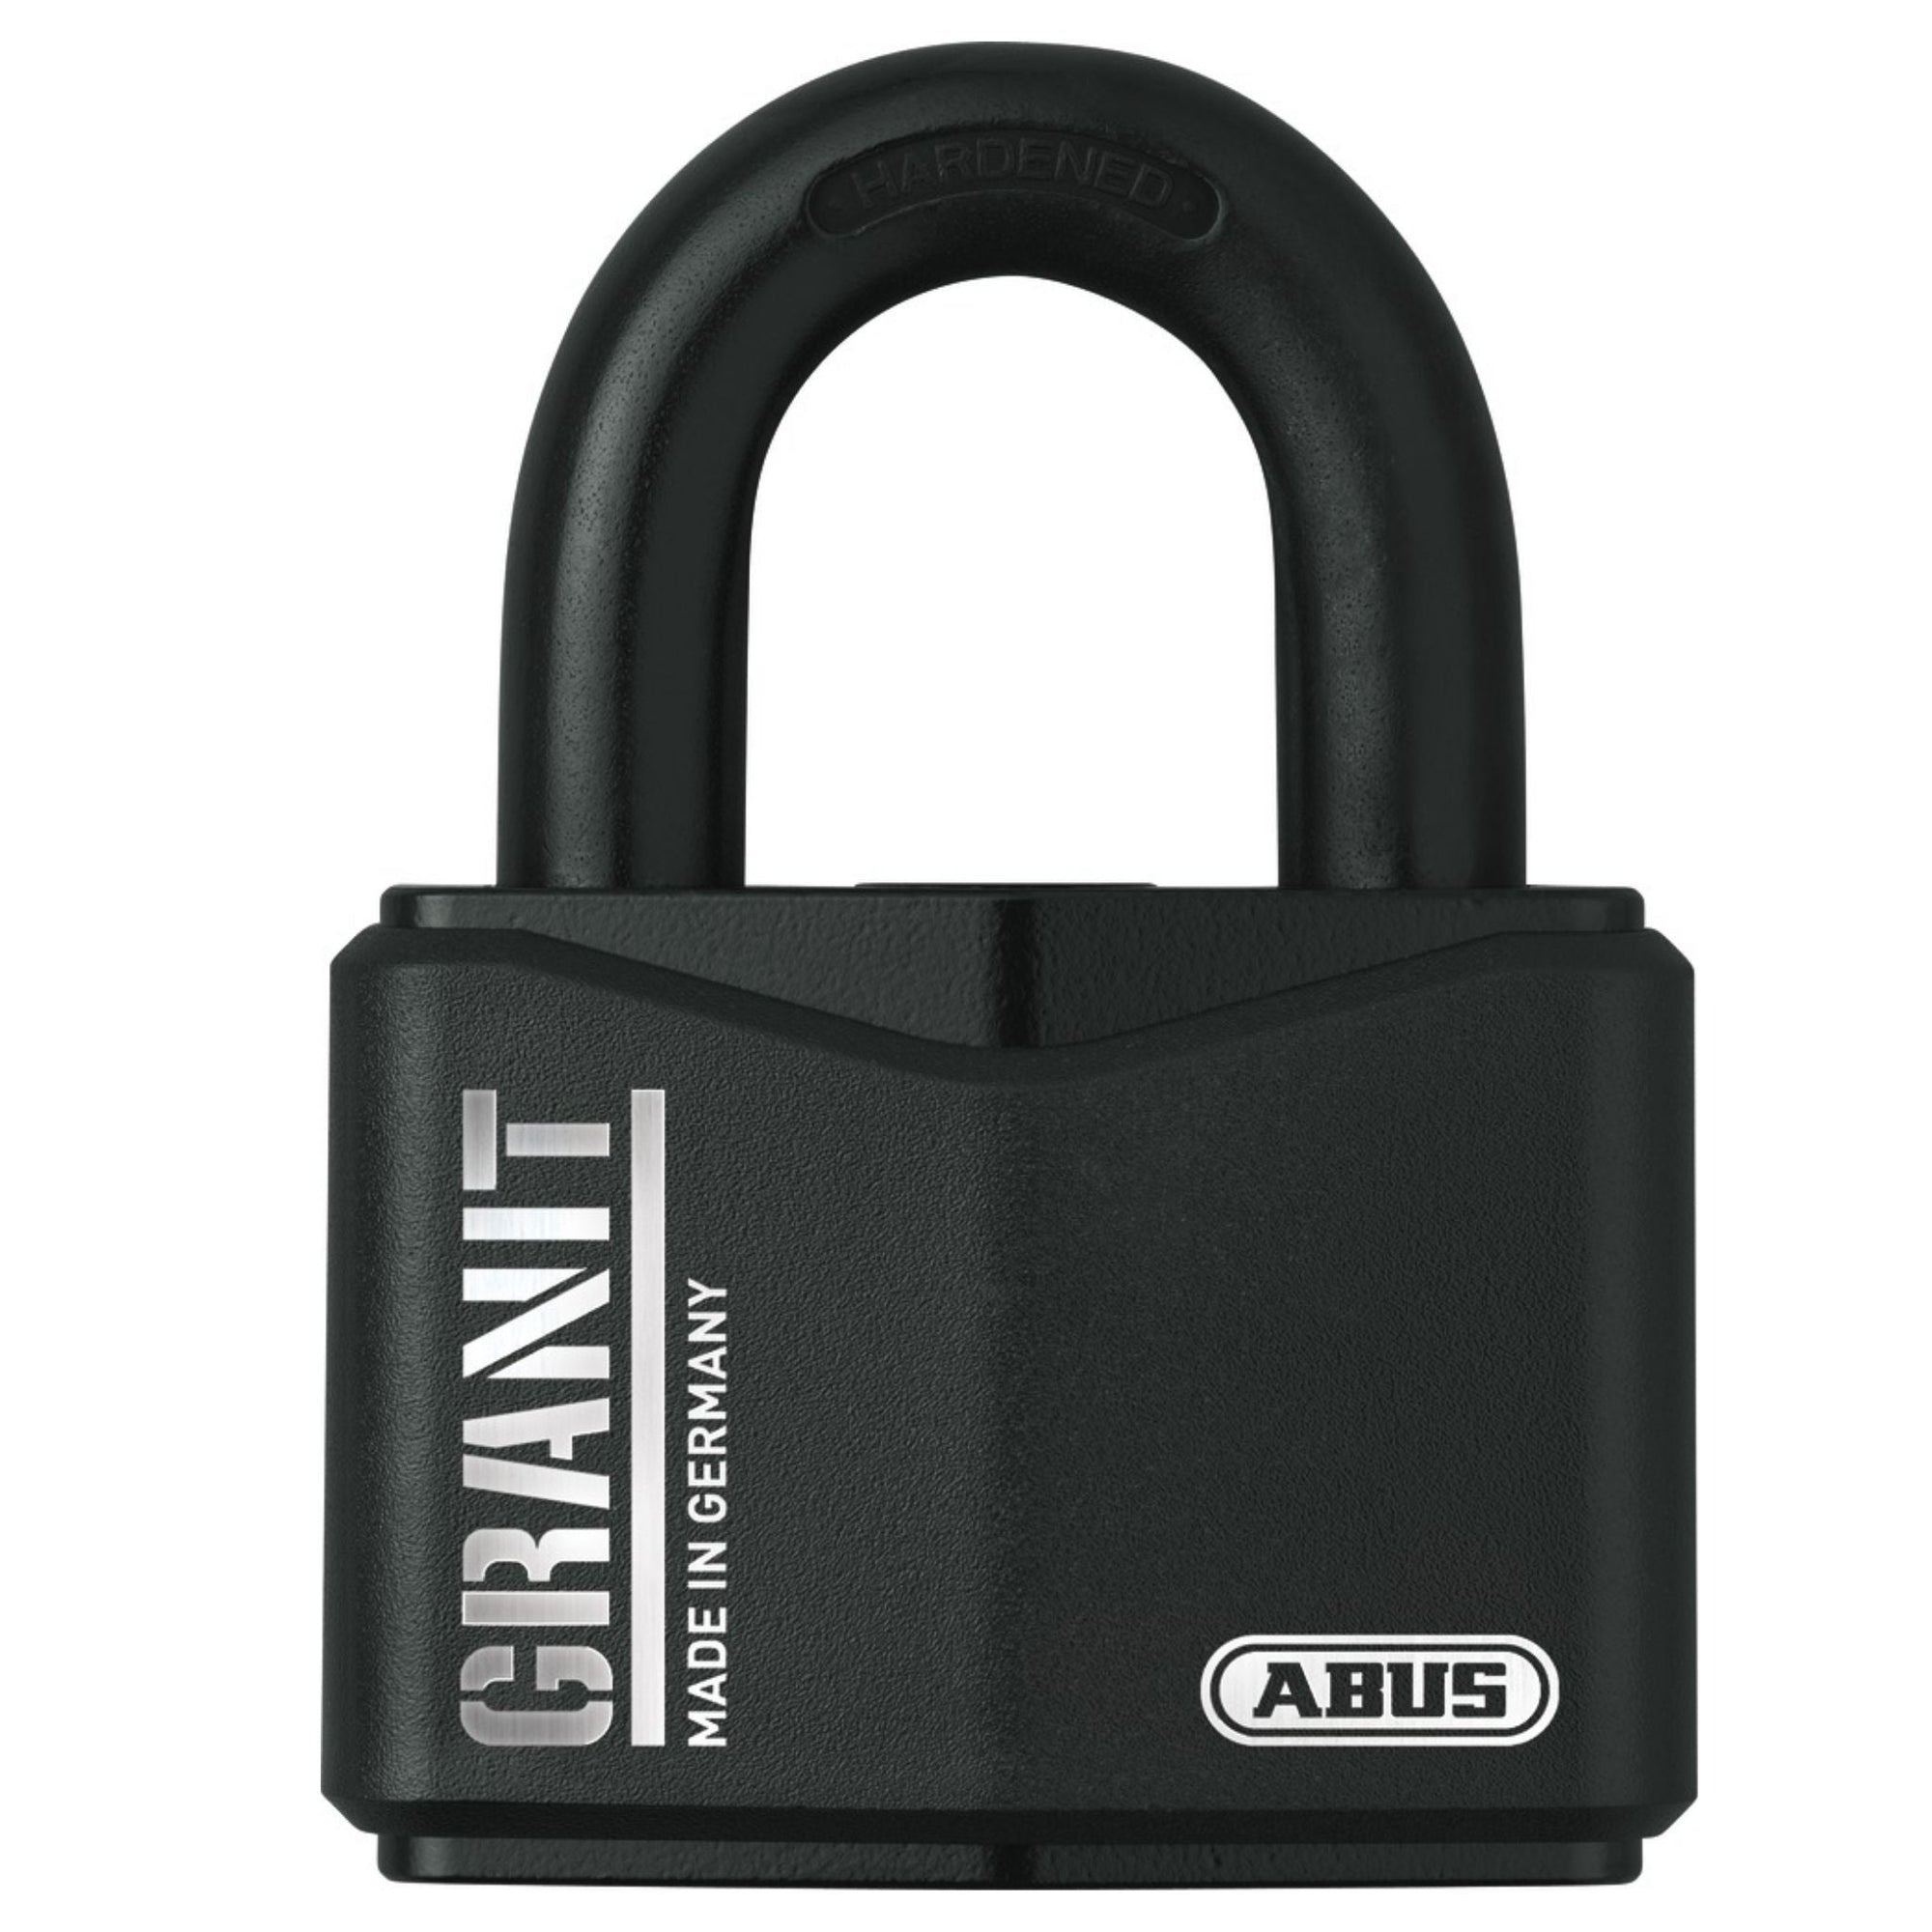 Abus 37/70 KA 5544653 Granit Lock Keyed Alike in Set of Four Locks Matched to Existing Key# 5544653 - The Lock Source